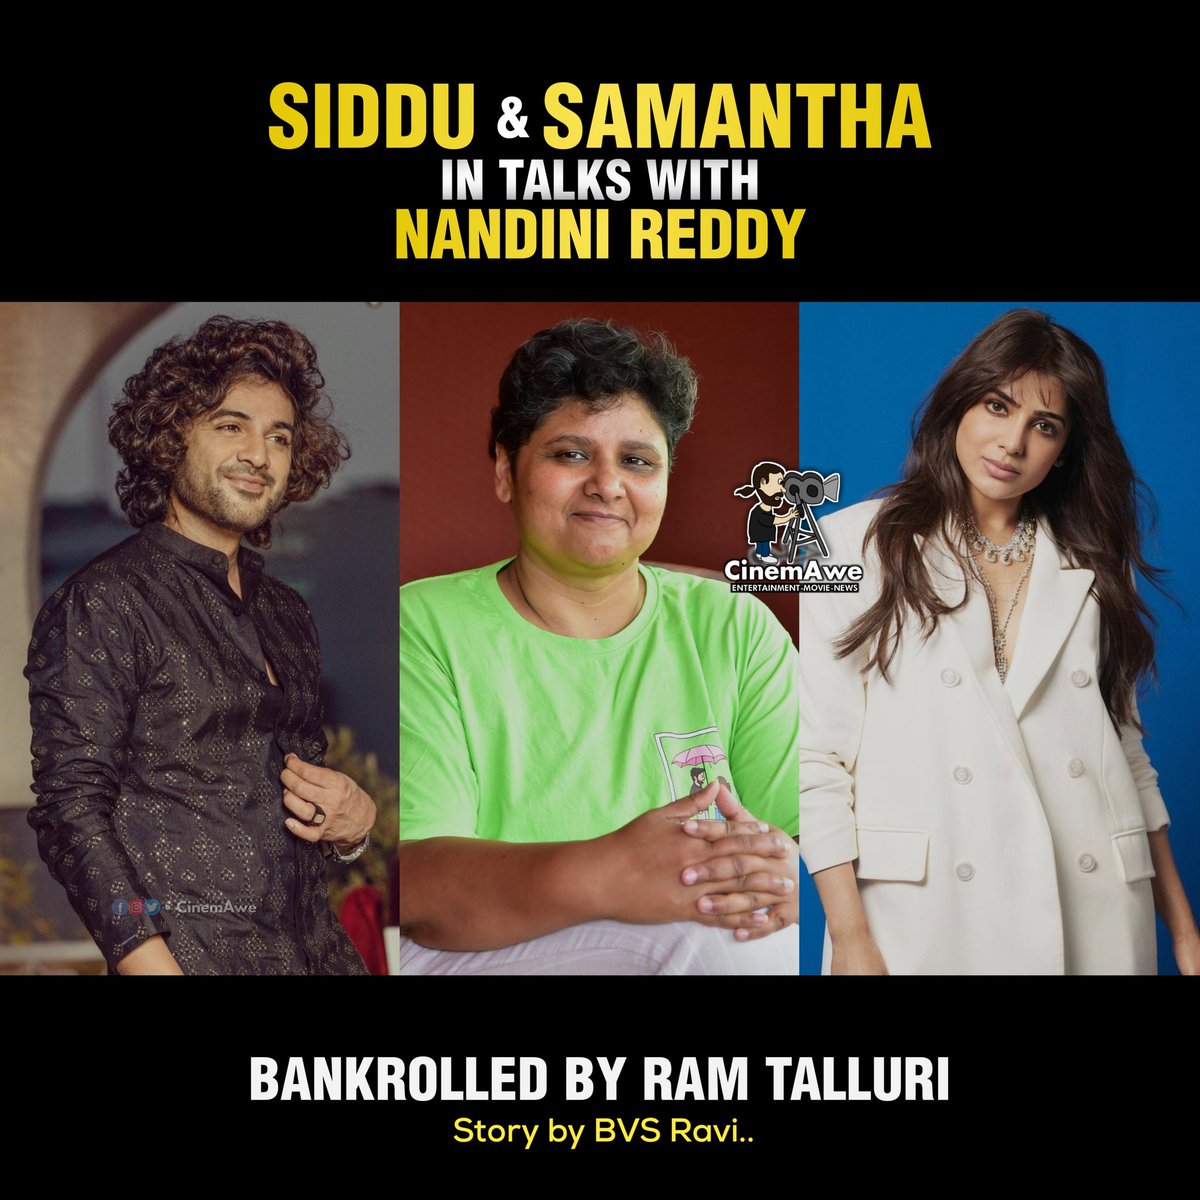 #SidduJonnalagadda & #Samantha in Talks with #NandiniReddy ❤️‍🔥💥

#DjTillu2 #DJTillu #Kushi #BVSRavi #RamTalluri #CinemAwe